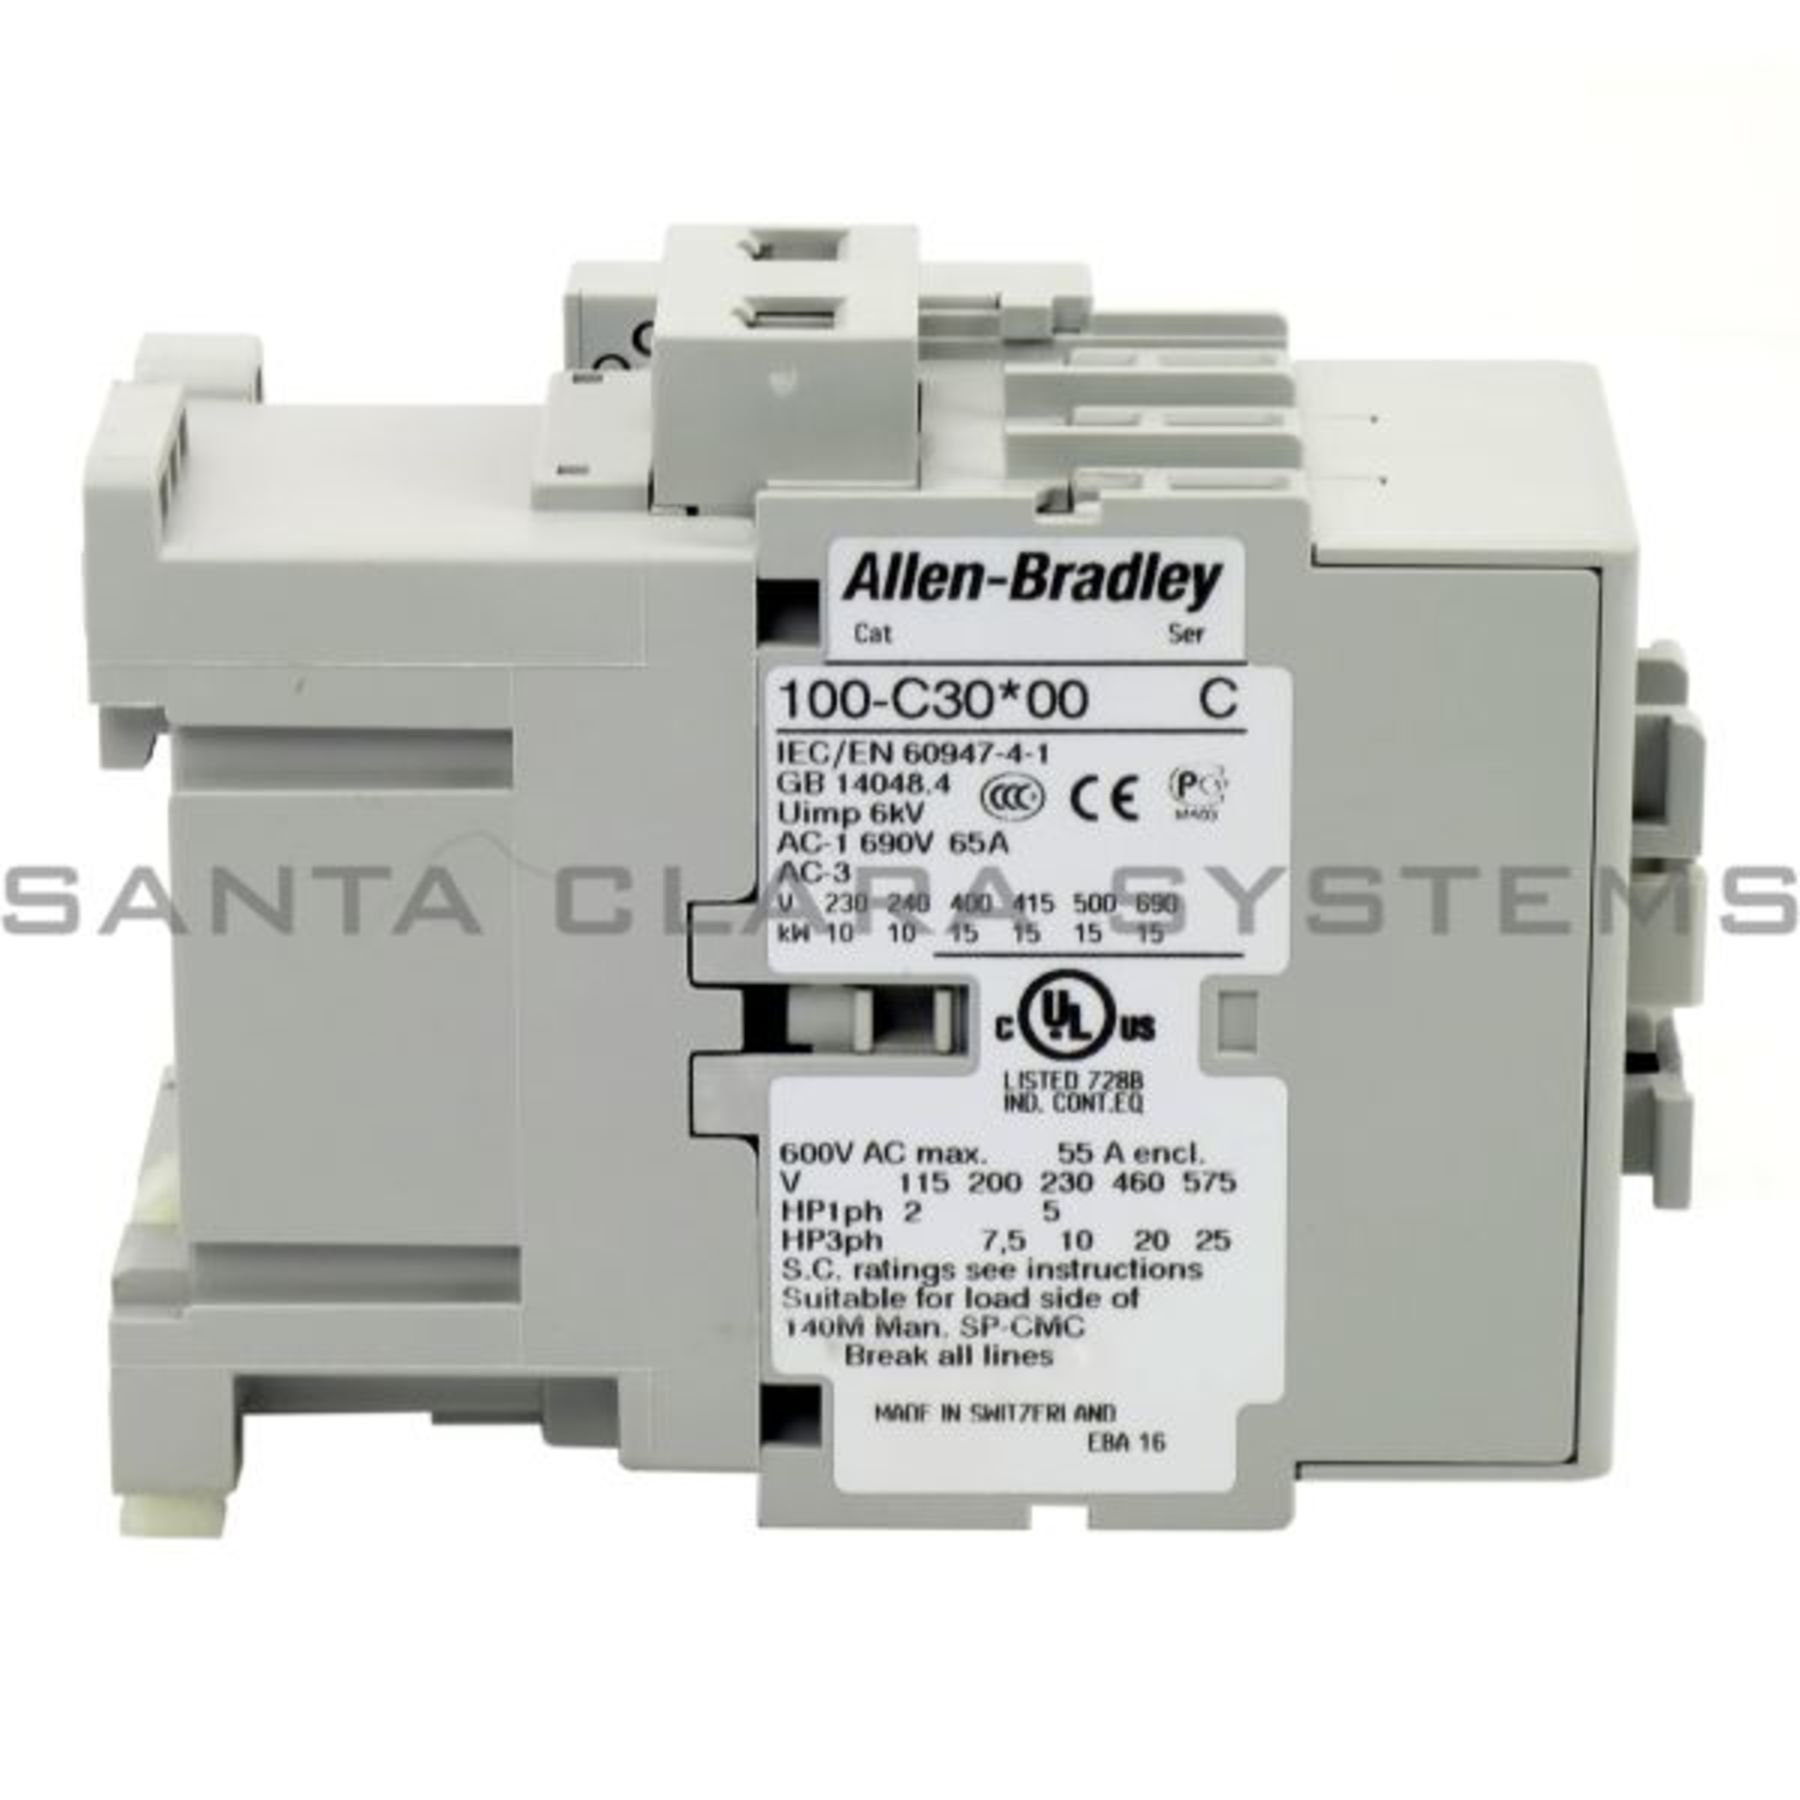 Allen-Bradley 100-C30D10 Contactor Series C with 100-S Auxiliary Contact  Block